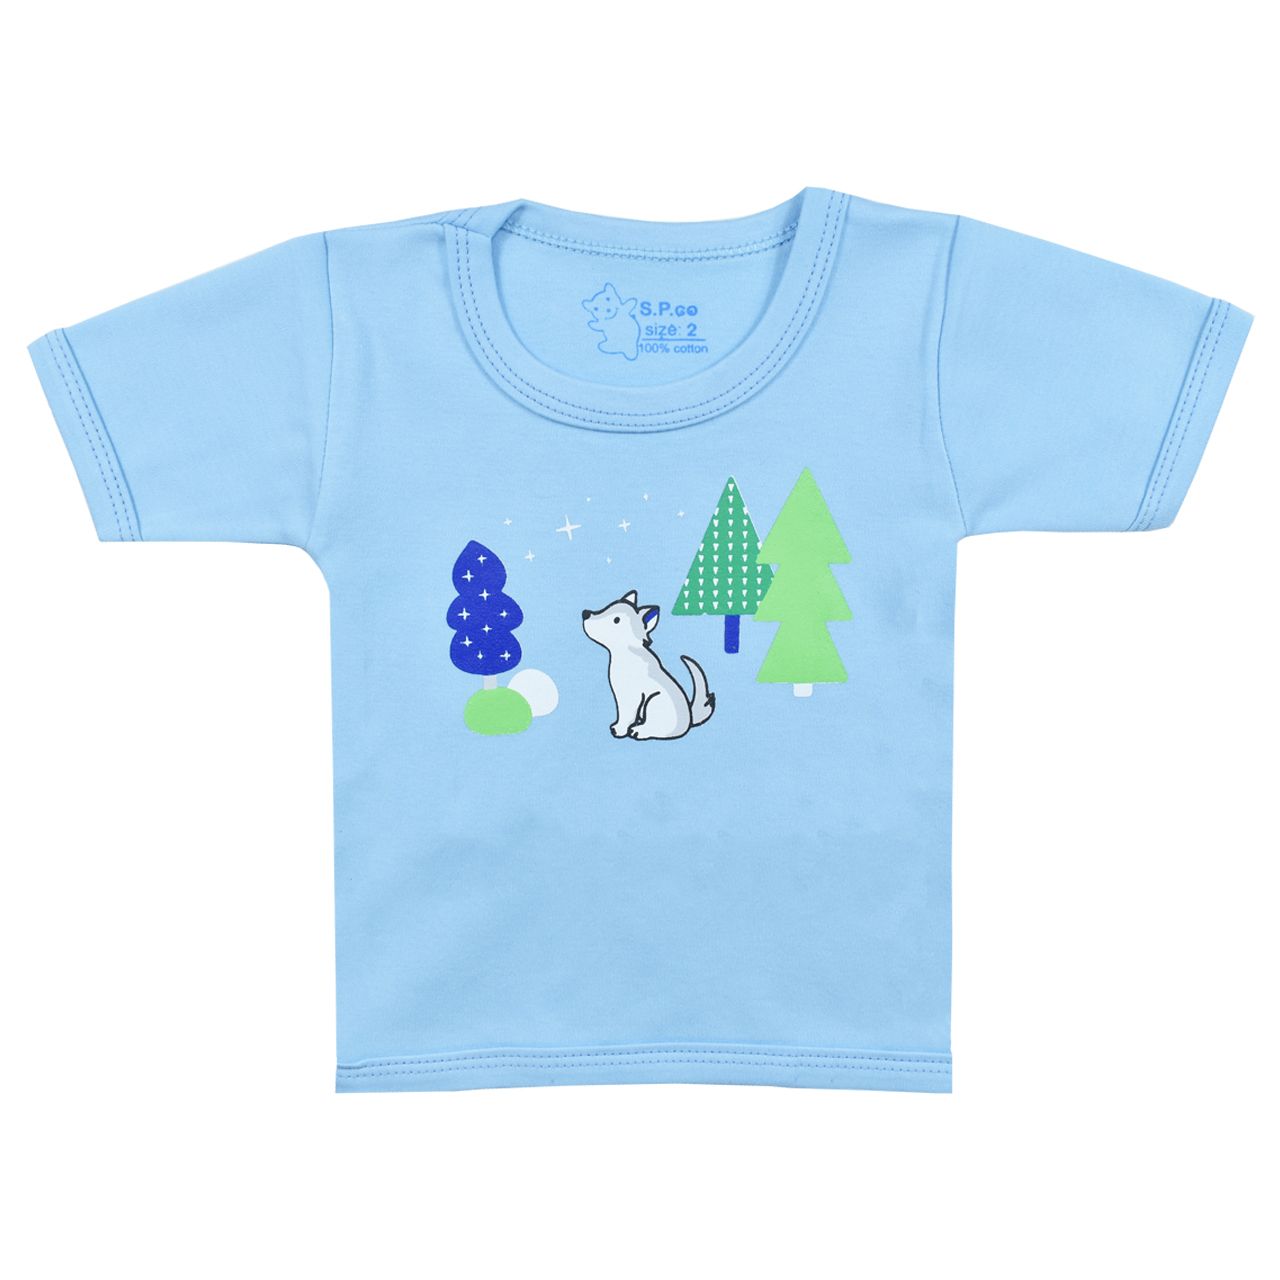 تی شرت آستین کوتاه نوزادی اسپیکو کد 301 -1 -  - 6